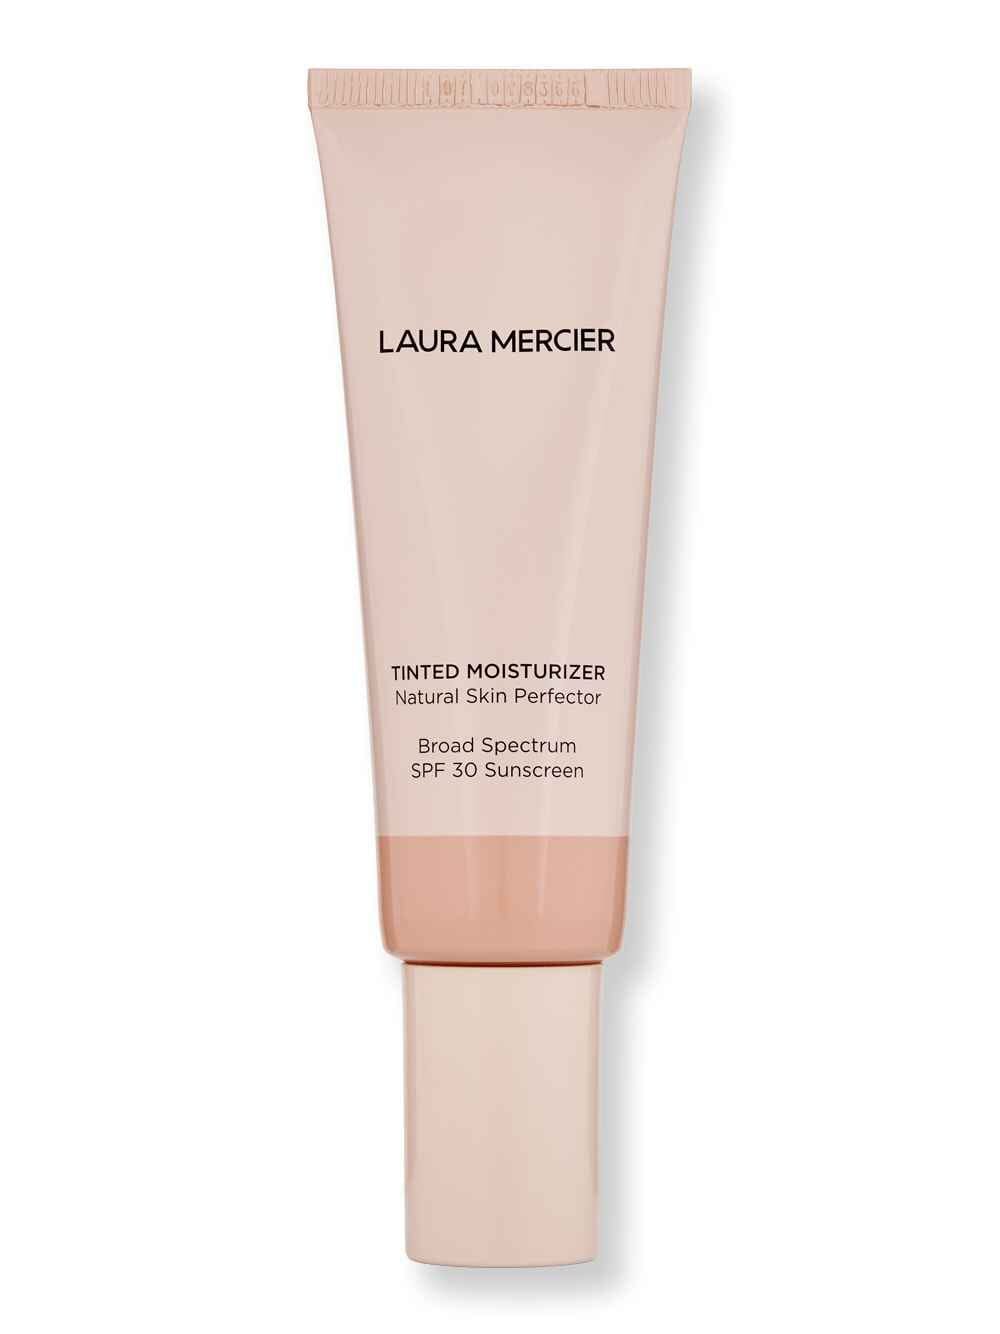 Laura Mercier Laura Mercier Tinted Moisturizer Natural Skin Perfector SPF30 1.7 oz50 ml2N1-Nude Tinted Moisturizers & Foundations 